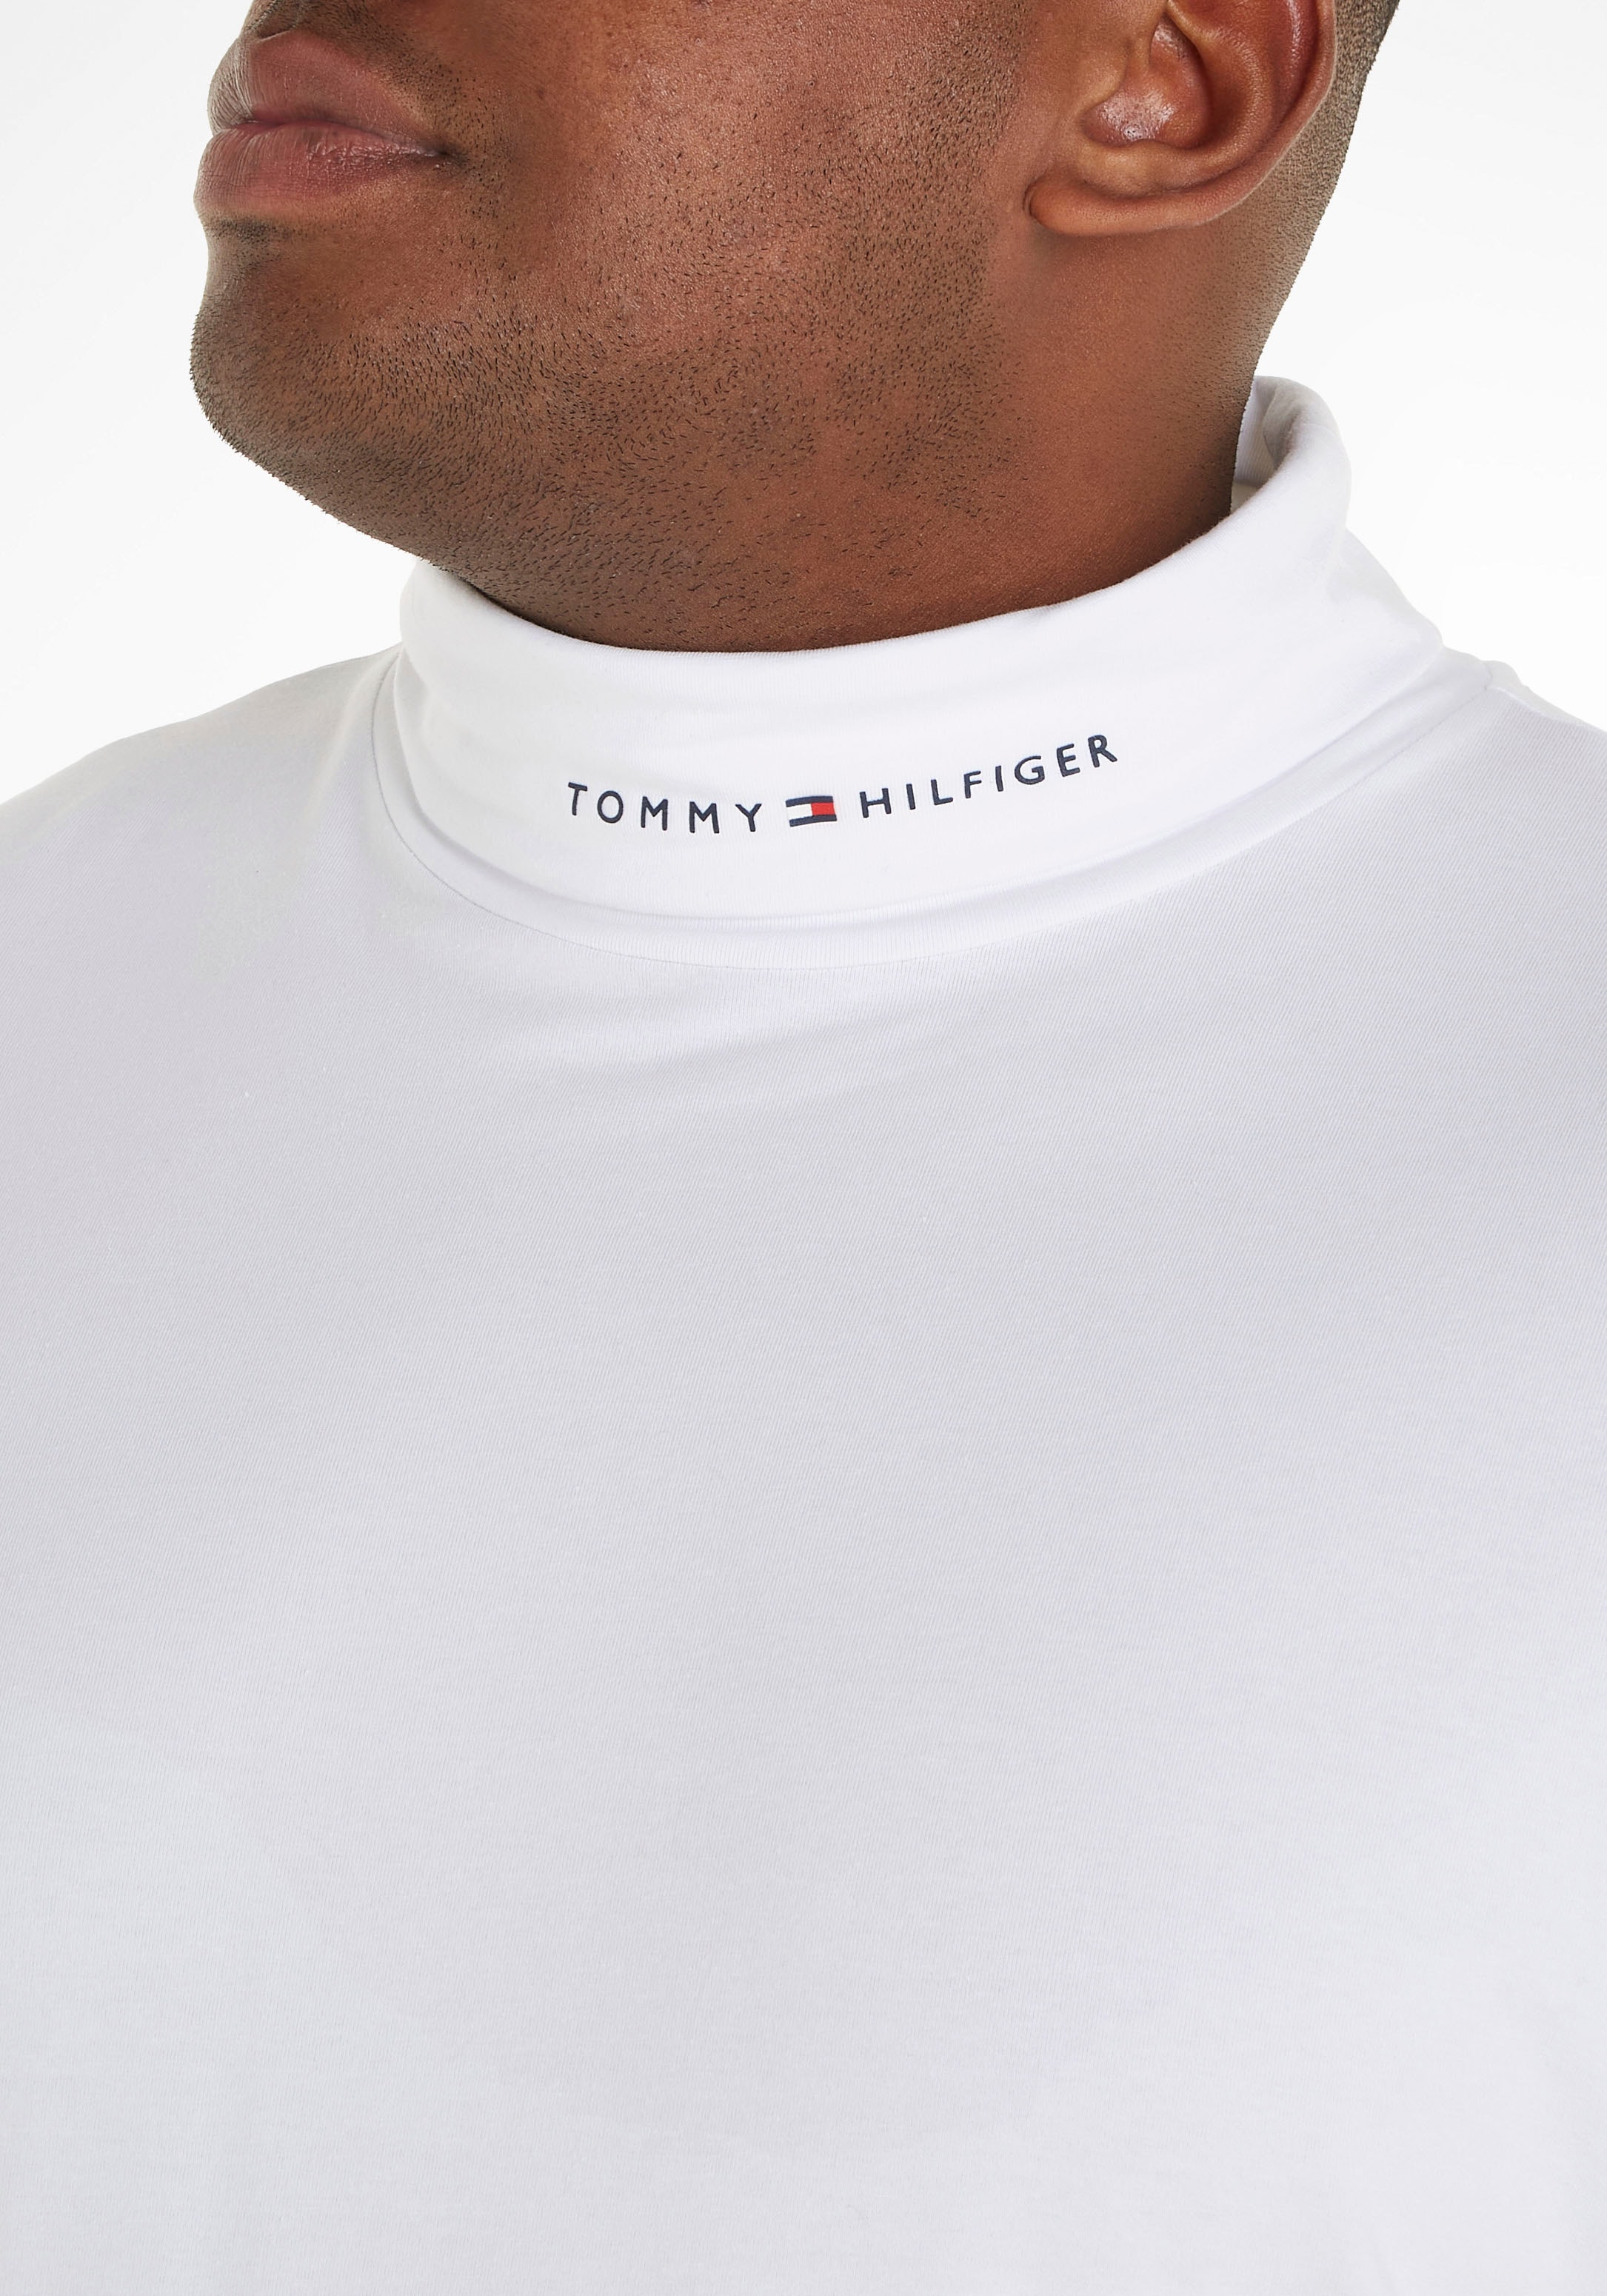 Tommy Hilfiger Big & Tall Rollkragenshirt, mit dezentem Logoschriftzug am Kragen